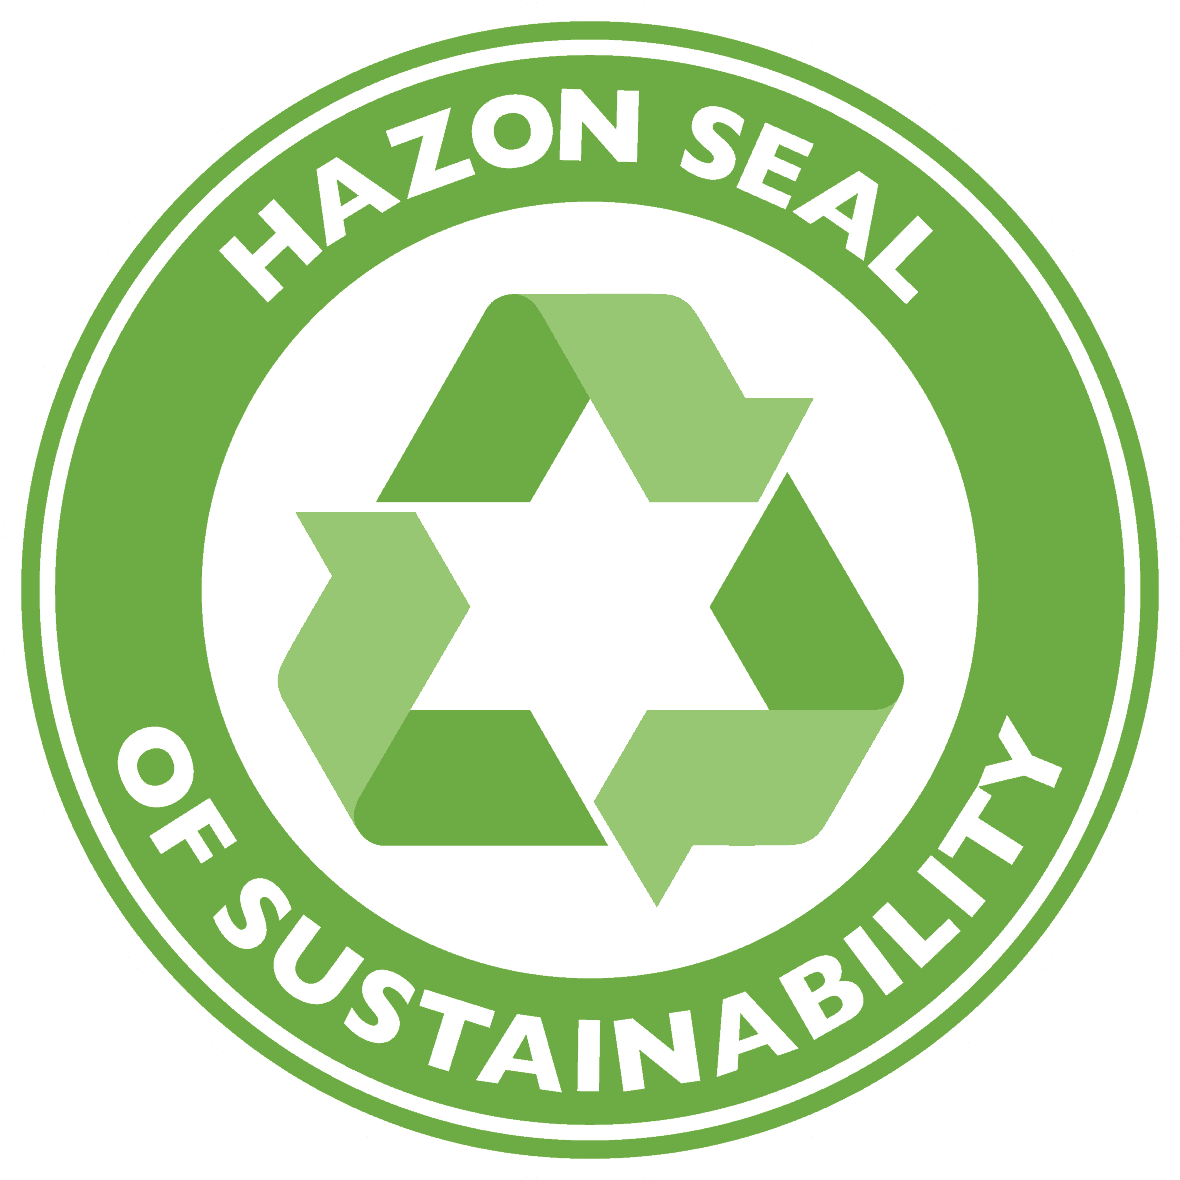 Hazon Seal